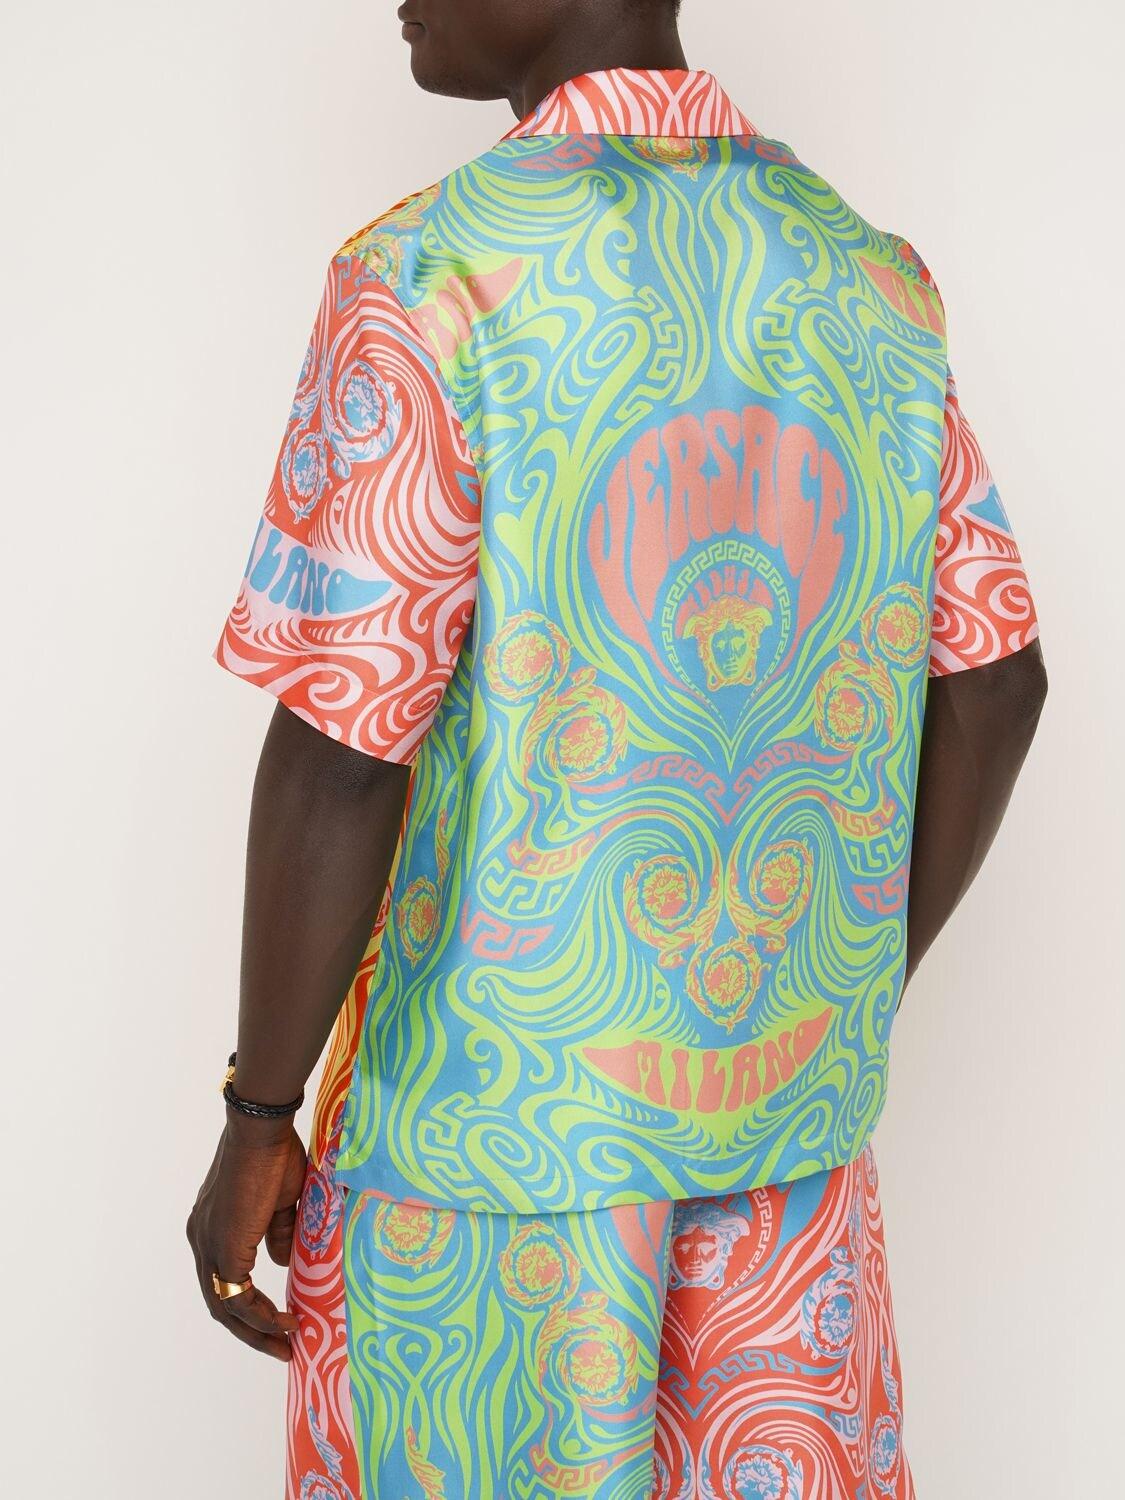 Versace Medusa Music Print Silk Shirt for Men - Lyst